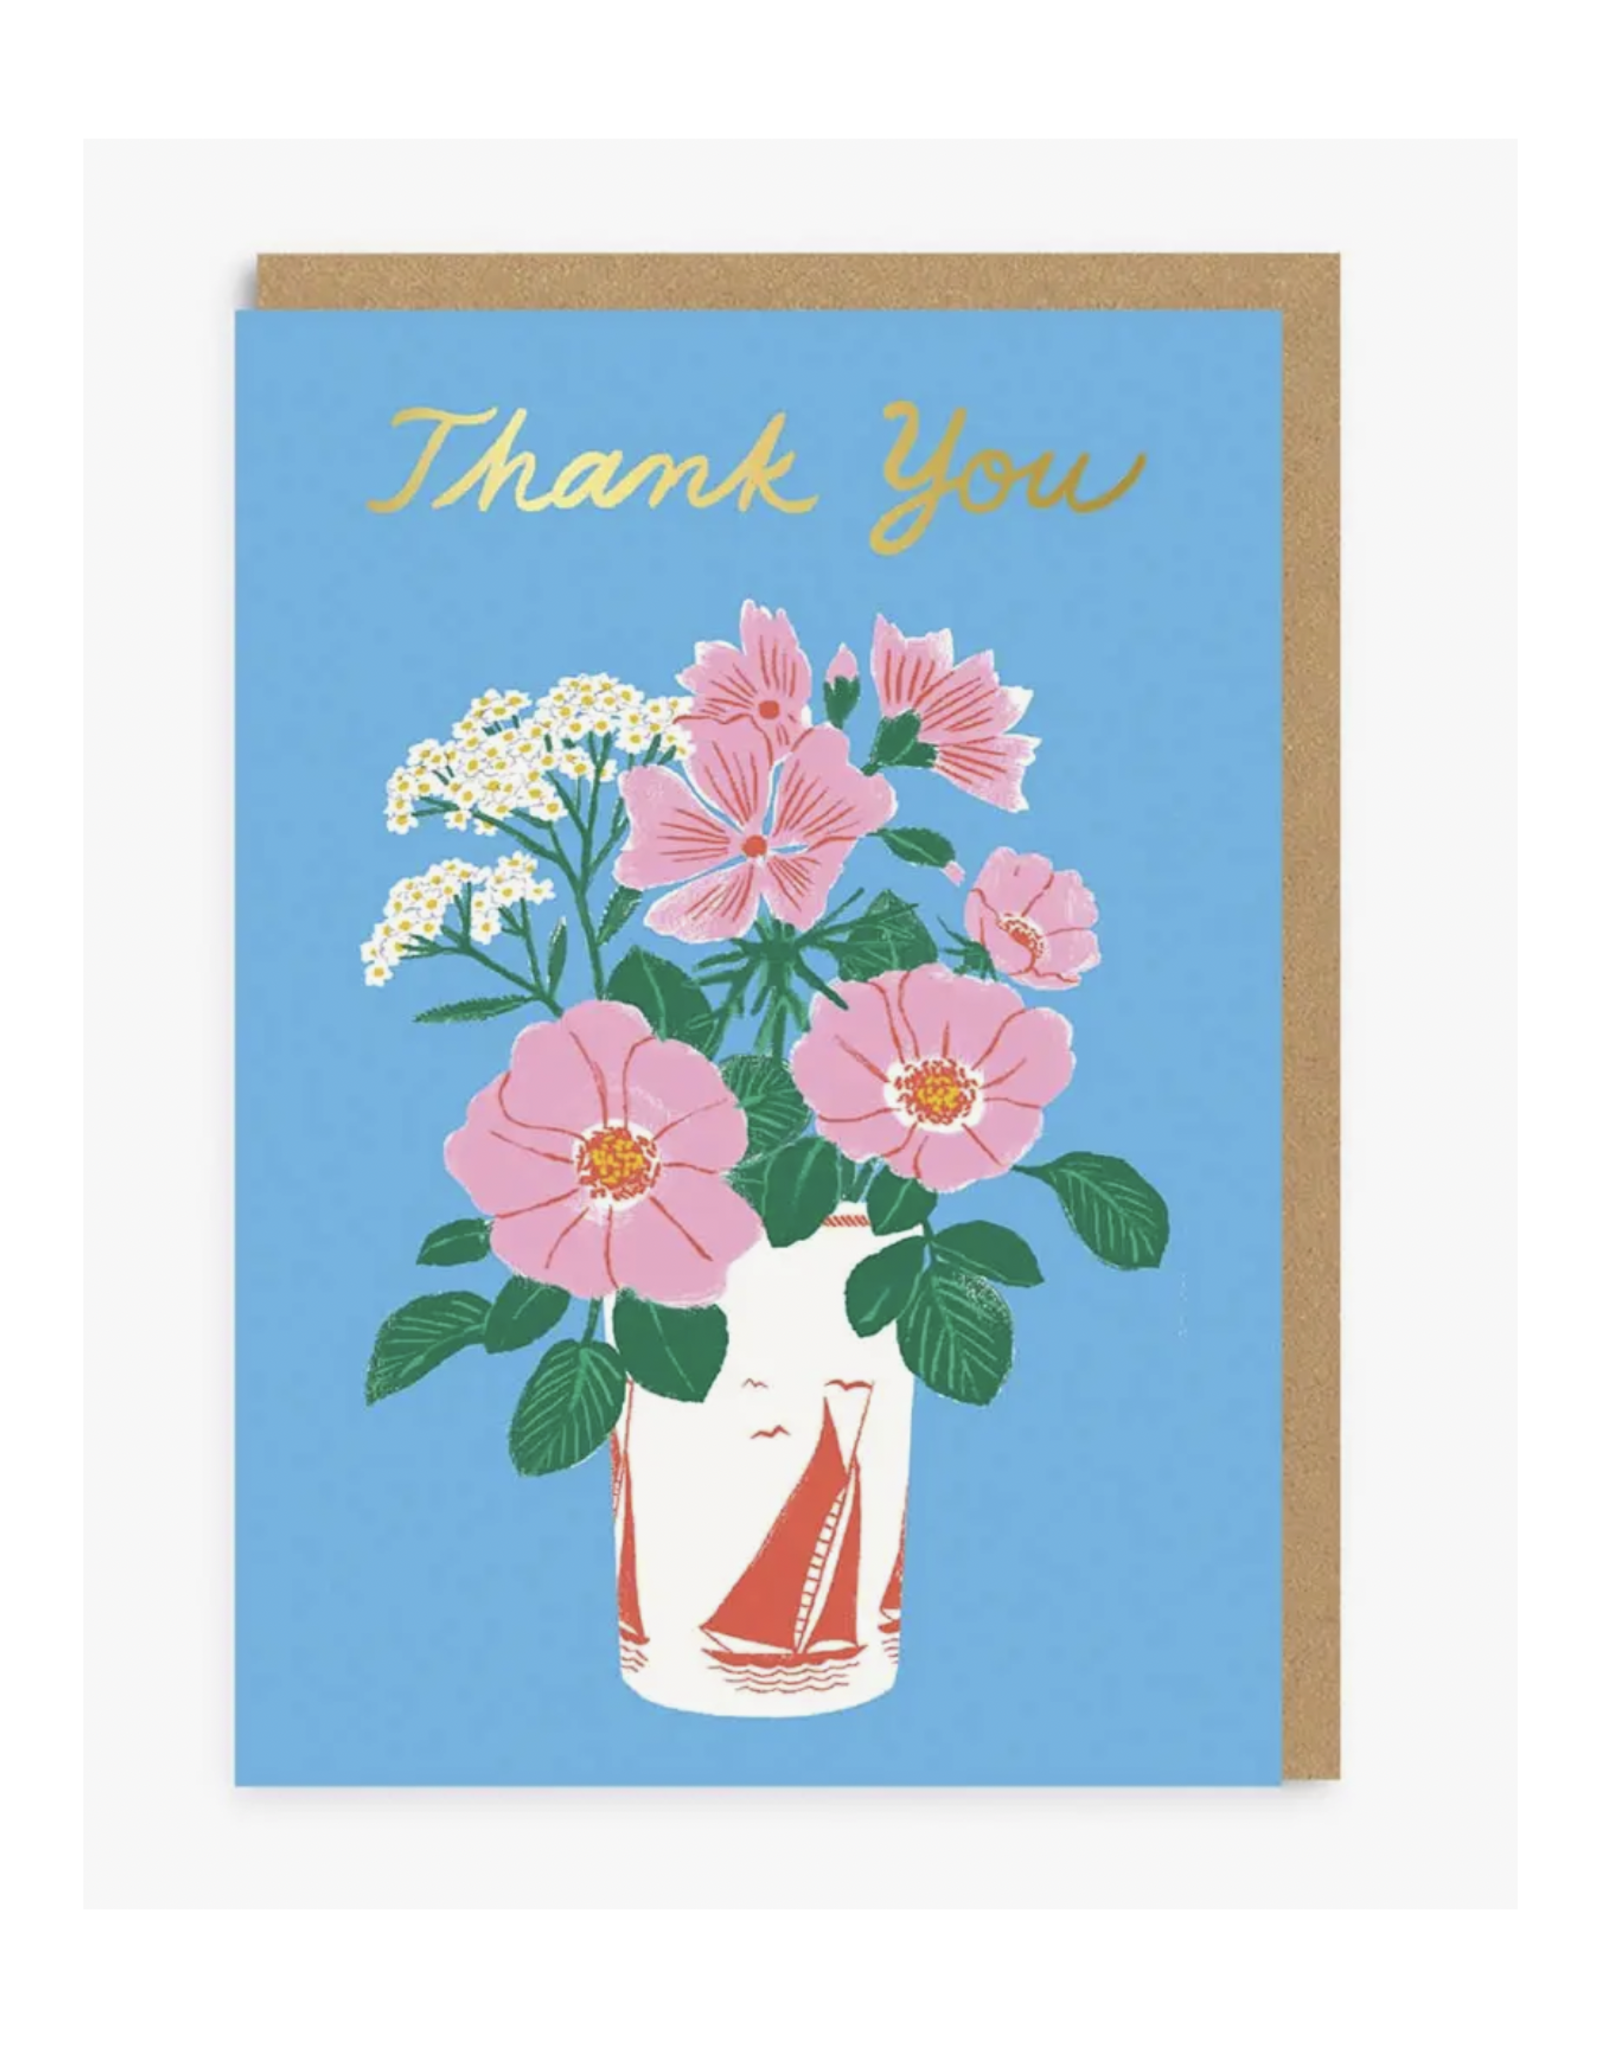 Thank you Floral Vase  Gold Foil Greeting Card